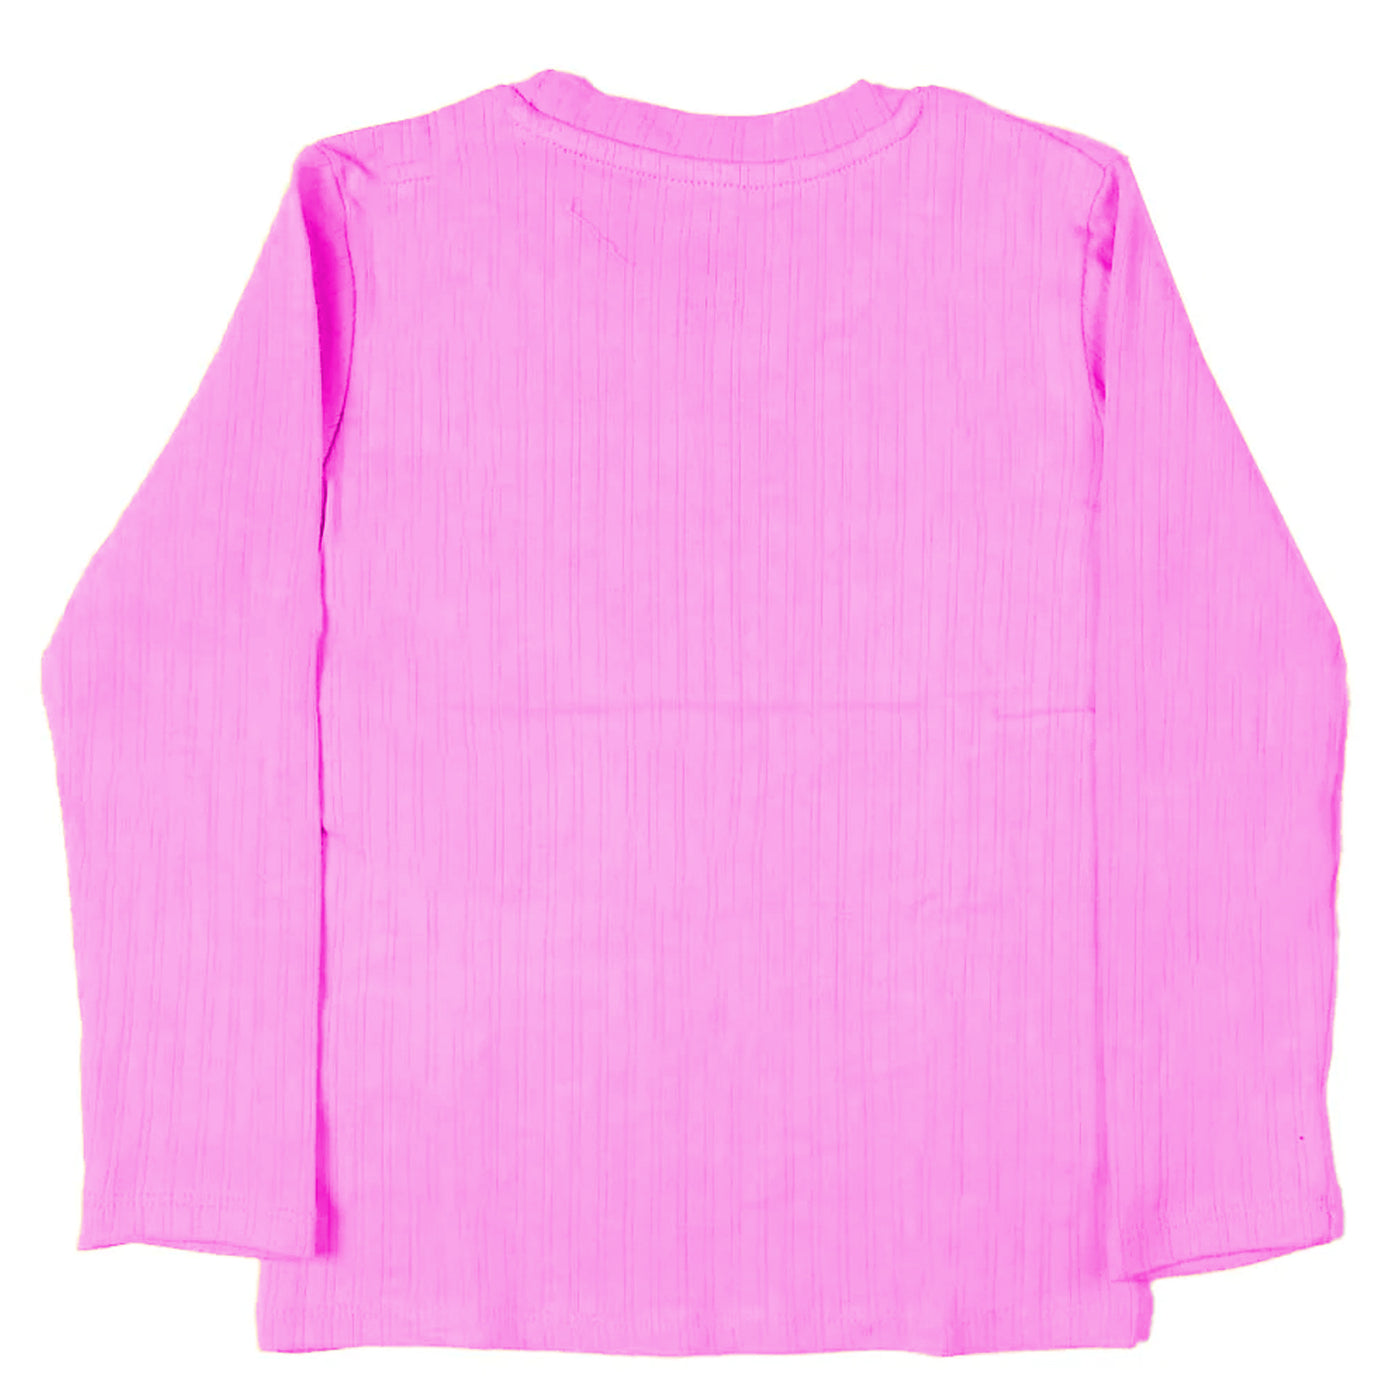 Kids Full Sleeves T-Shirt Rib - Pink